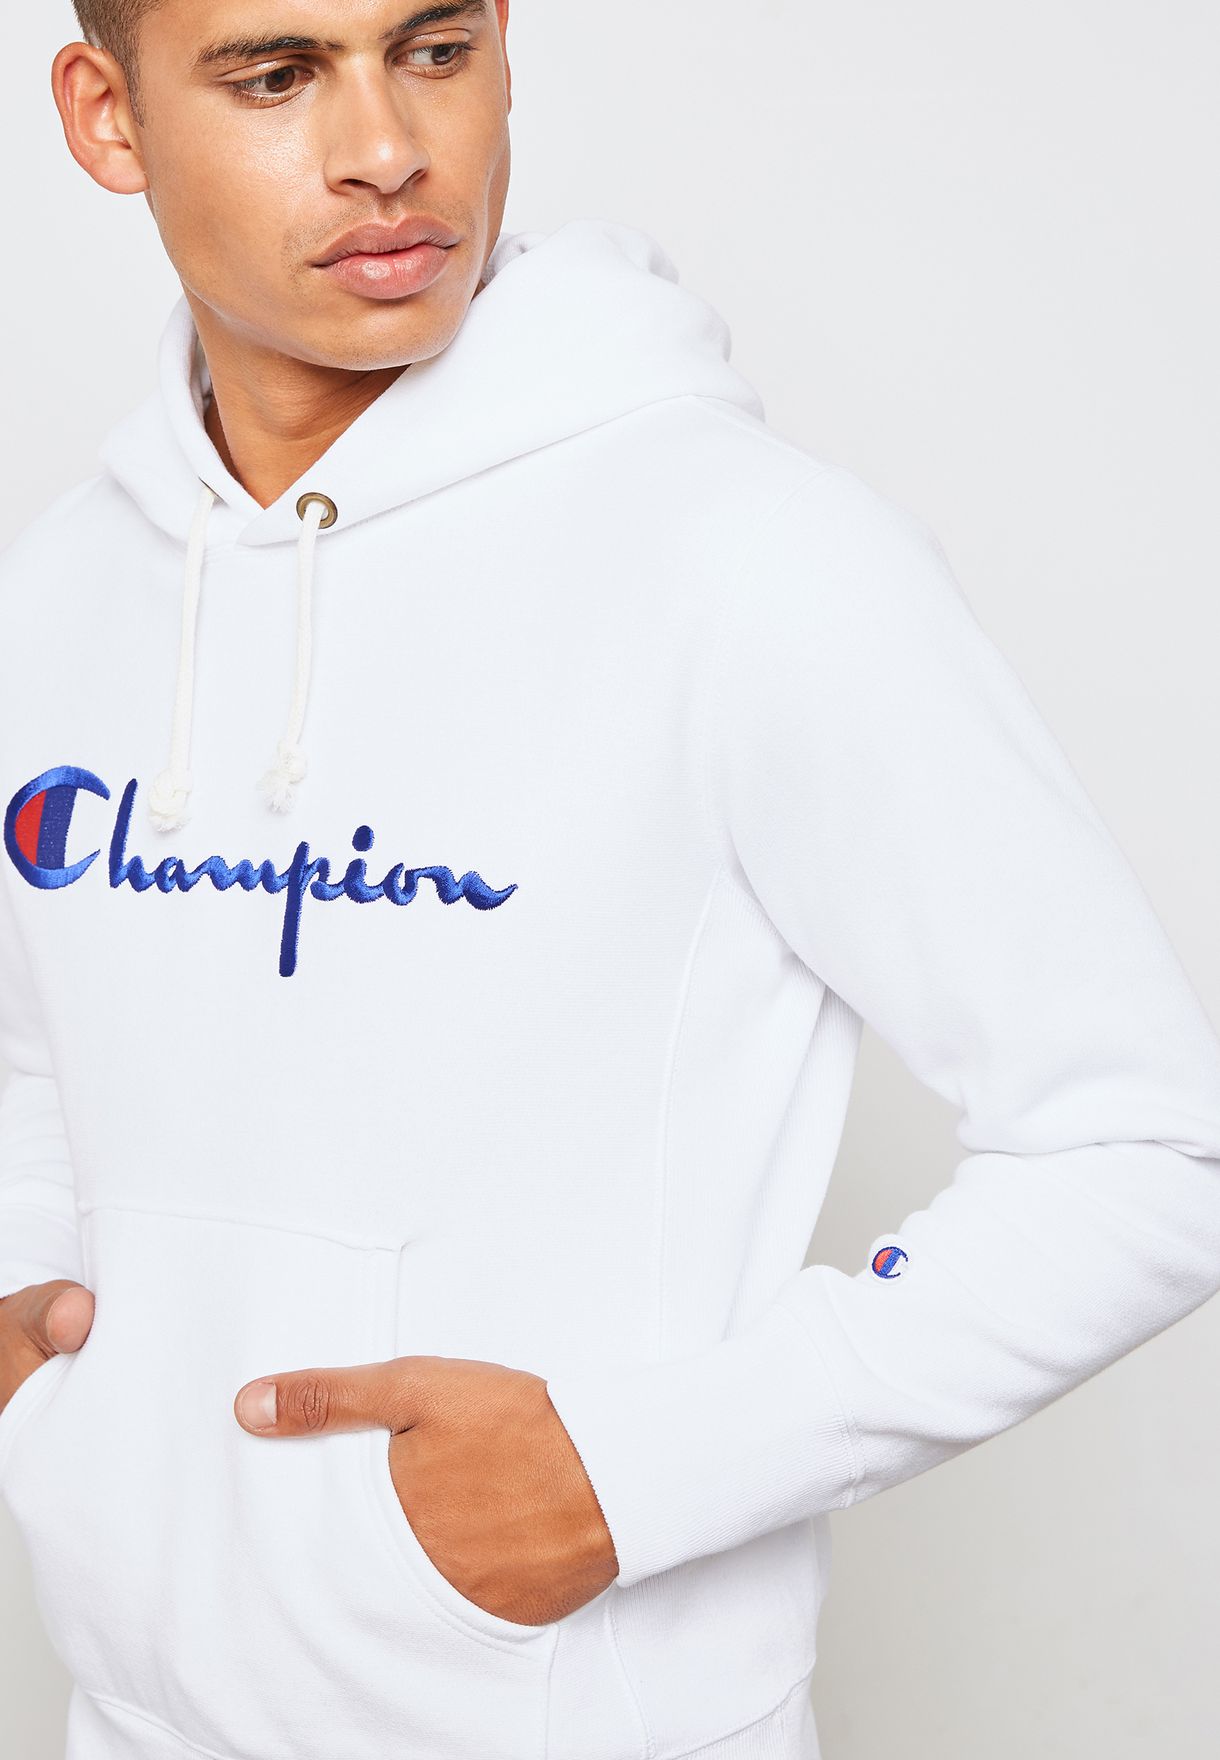 champion hoodie white boys